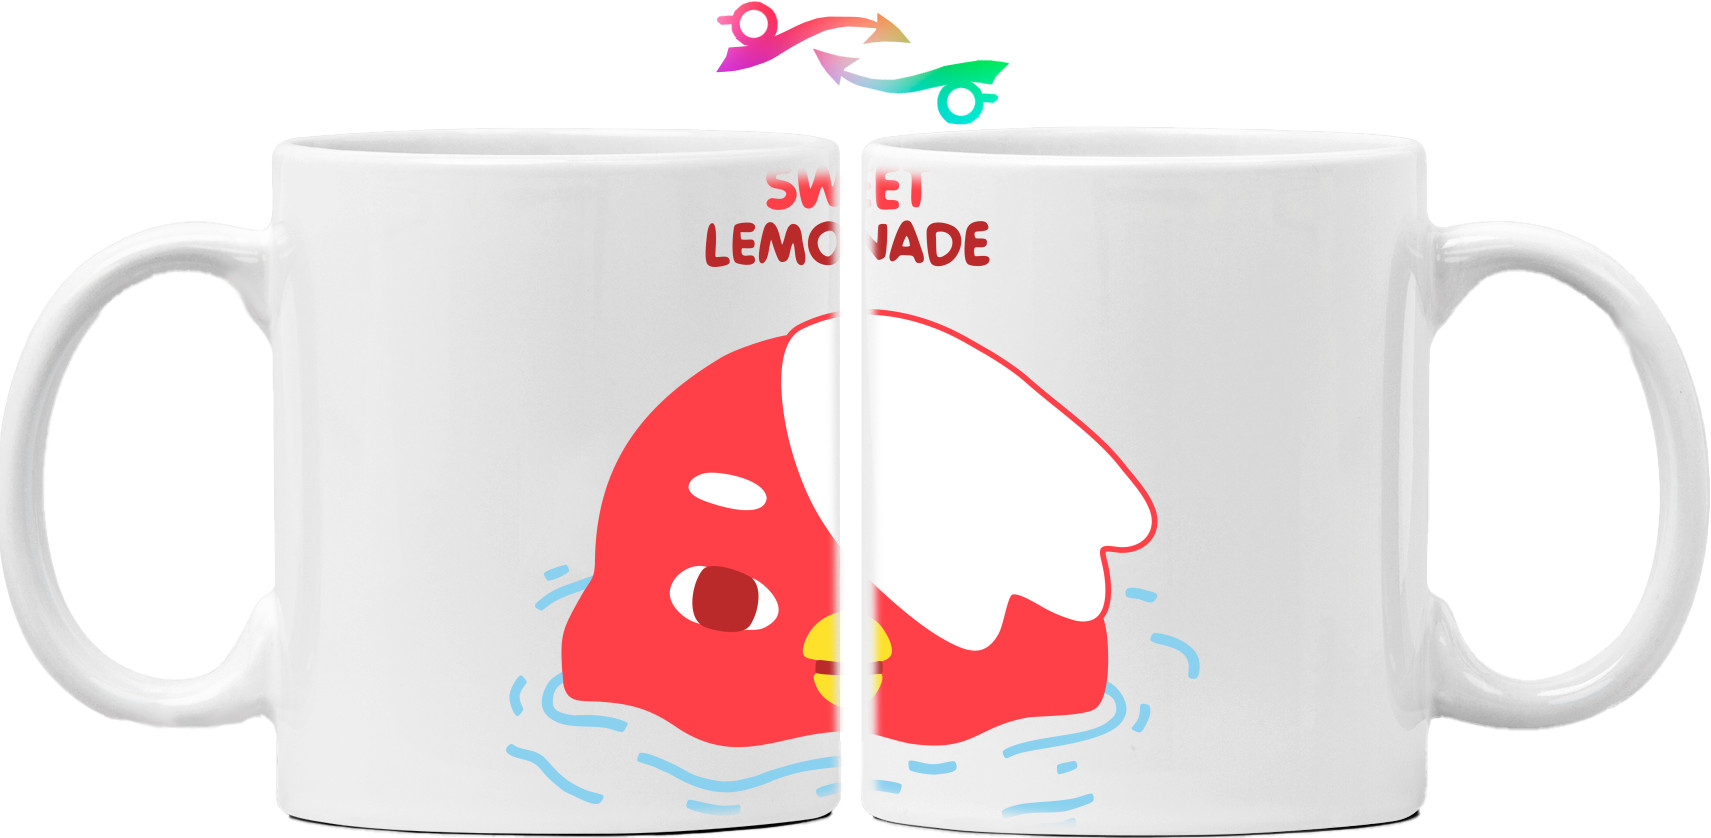 Sweet lemonade